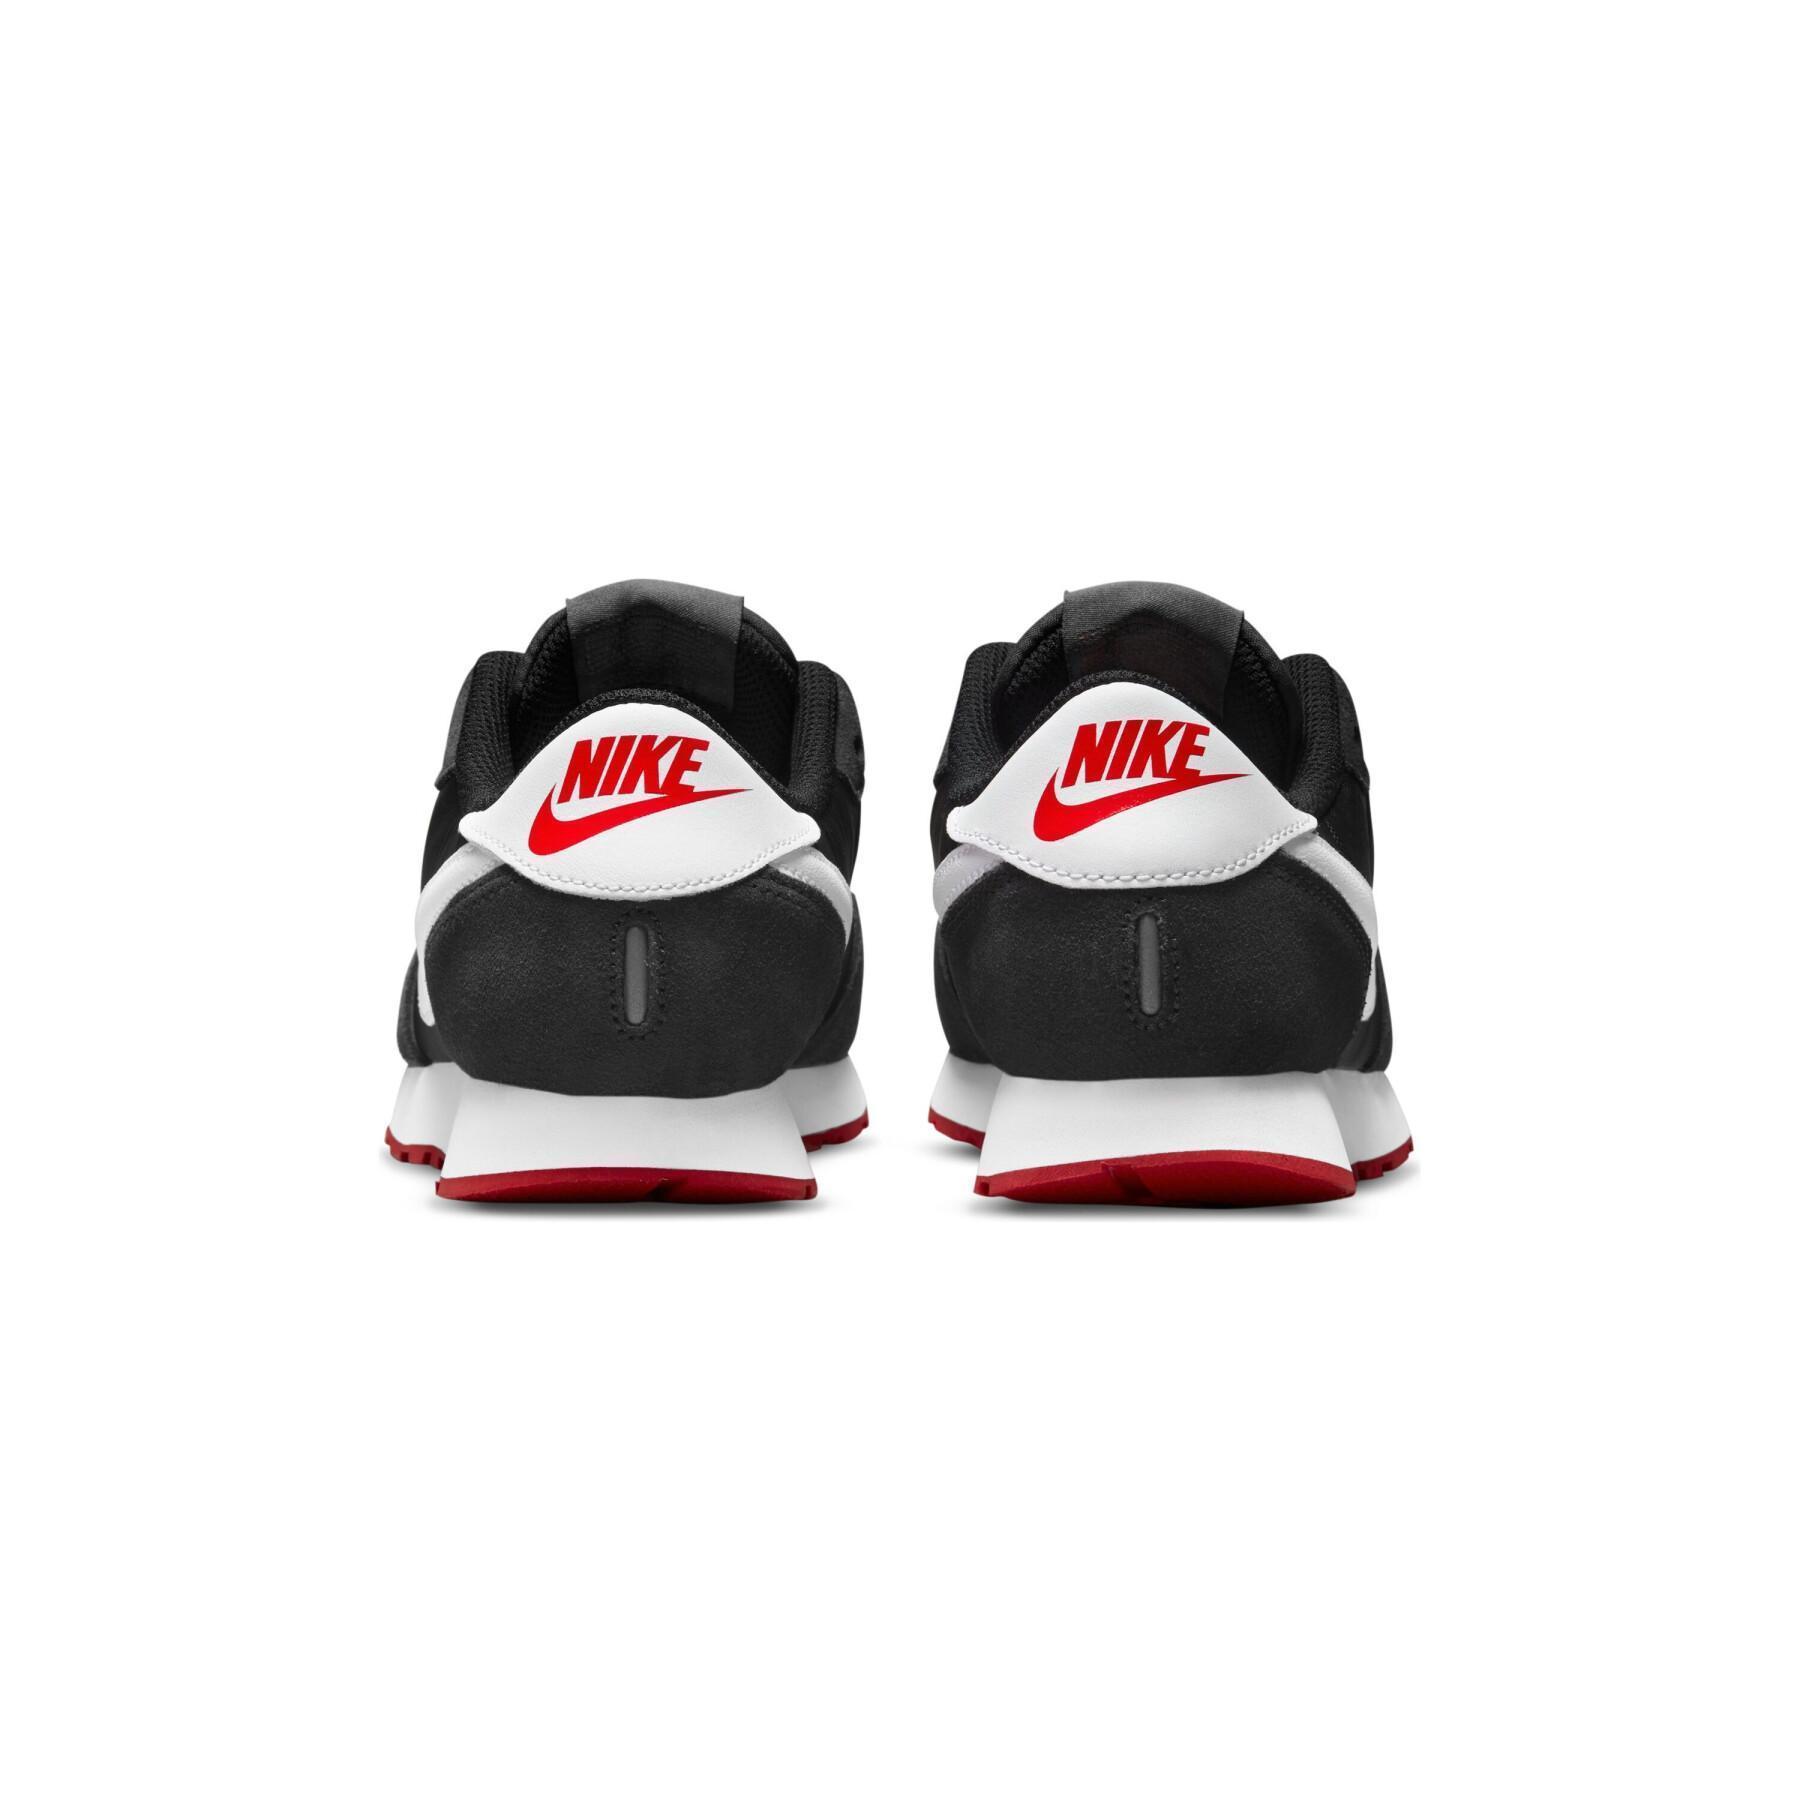 Children's sneakers Nike Valiant